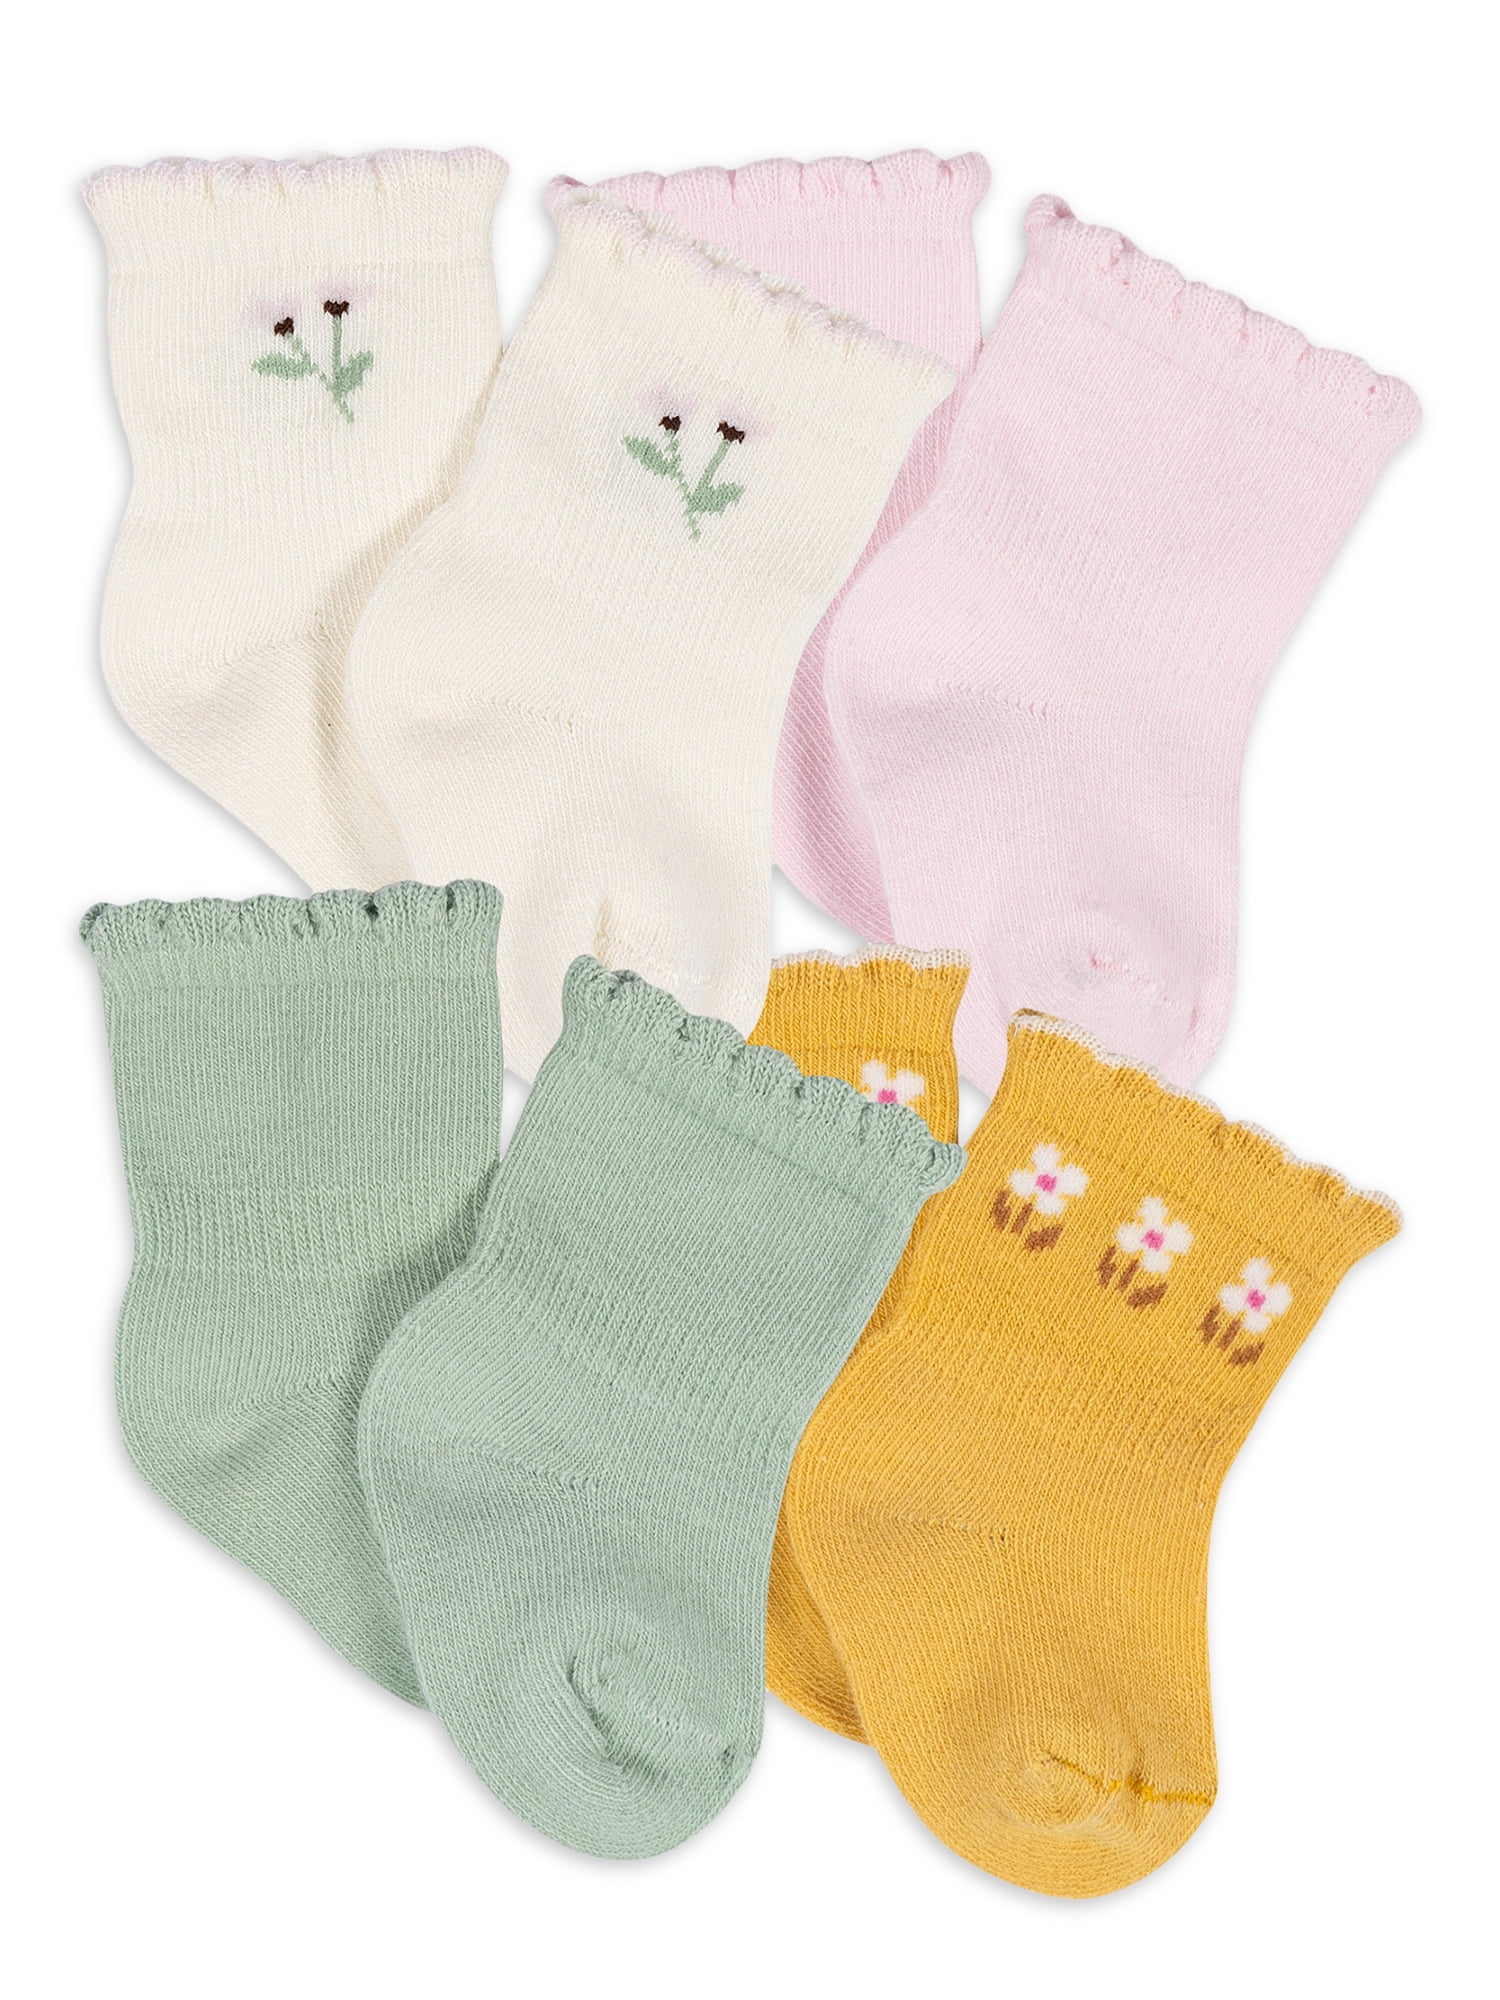 Gerber Baby Girl Wiggle Proof Socks, 4-Pack (Newborn - 0/6M) 